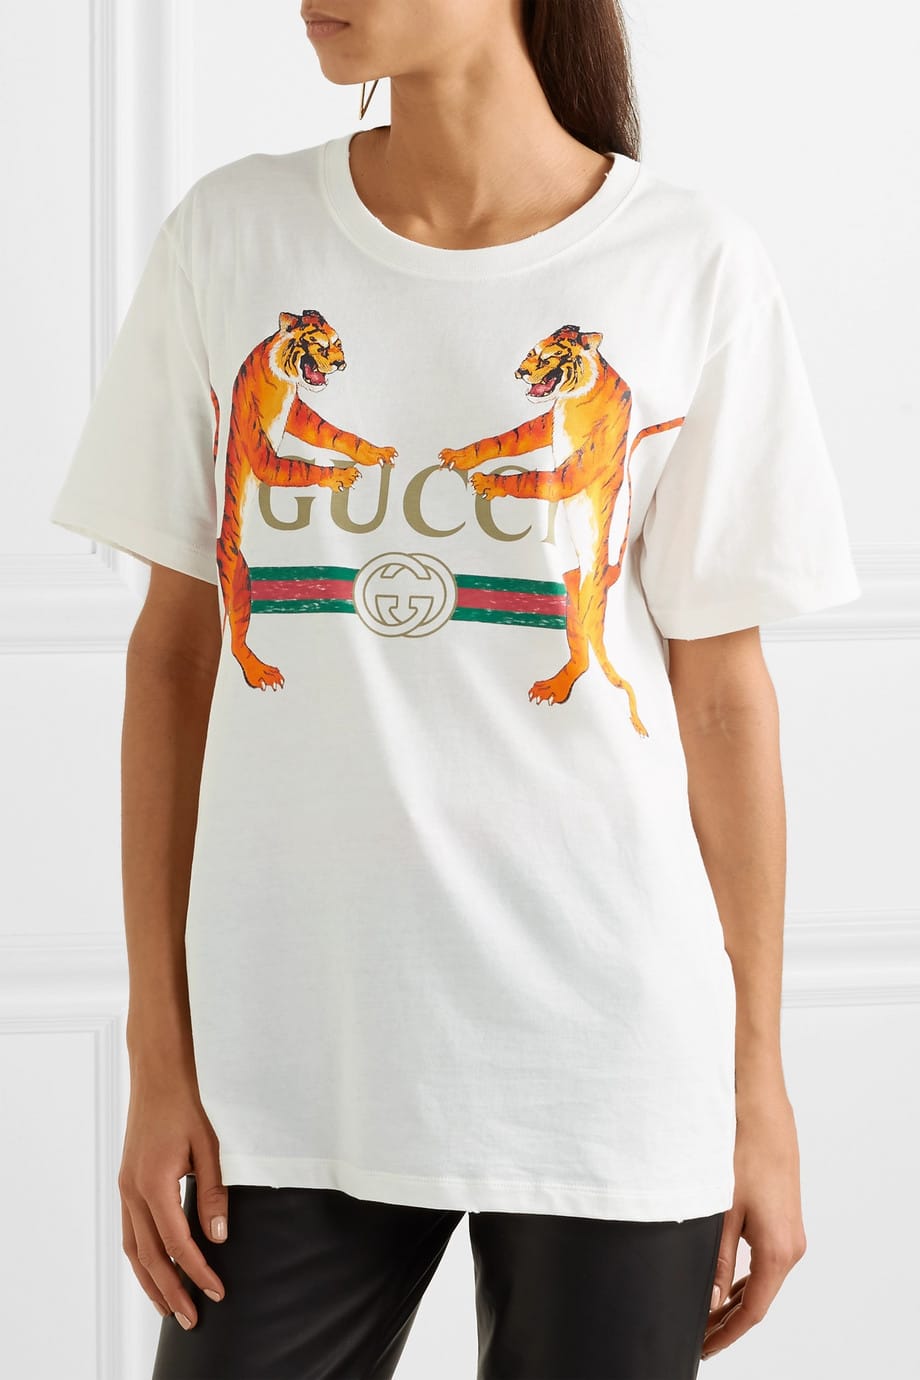 Gucci Logo Print T-Shirt Roaring Tigers 